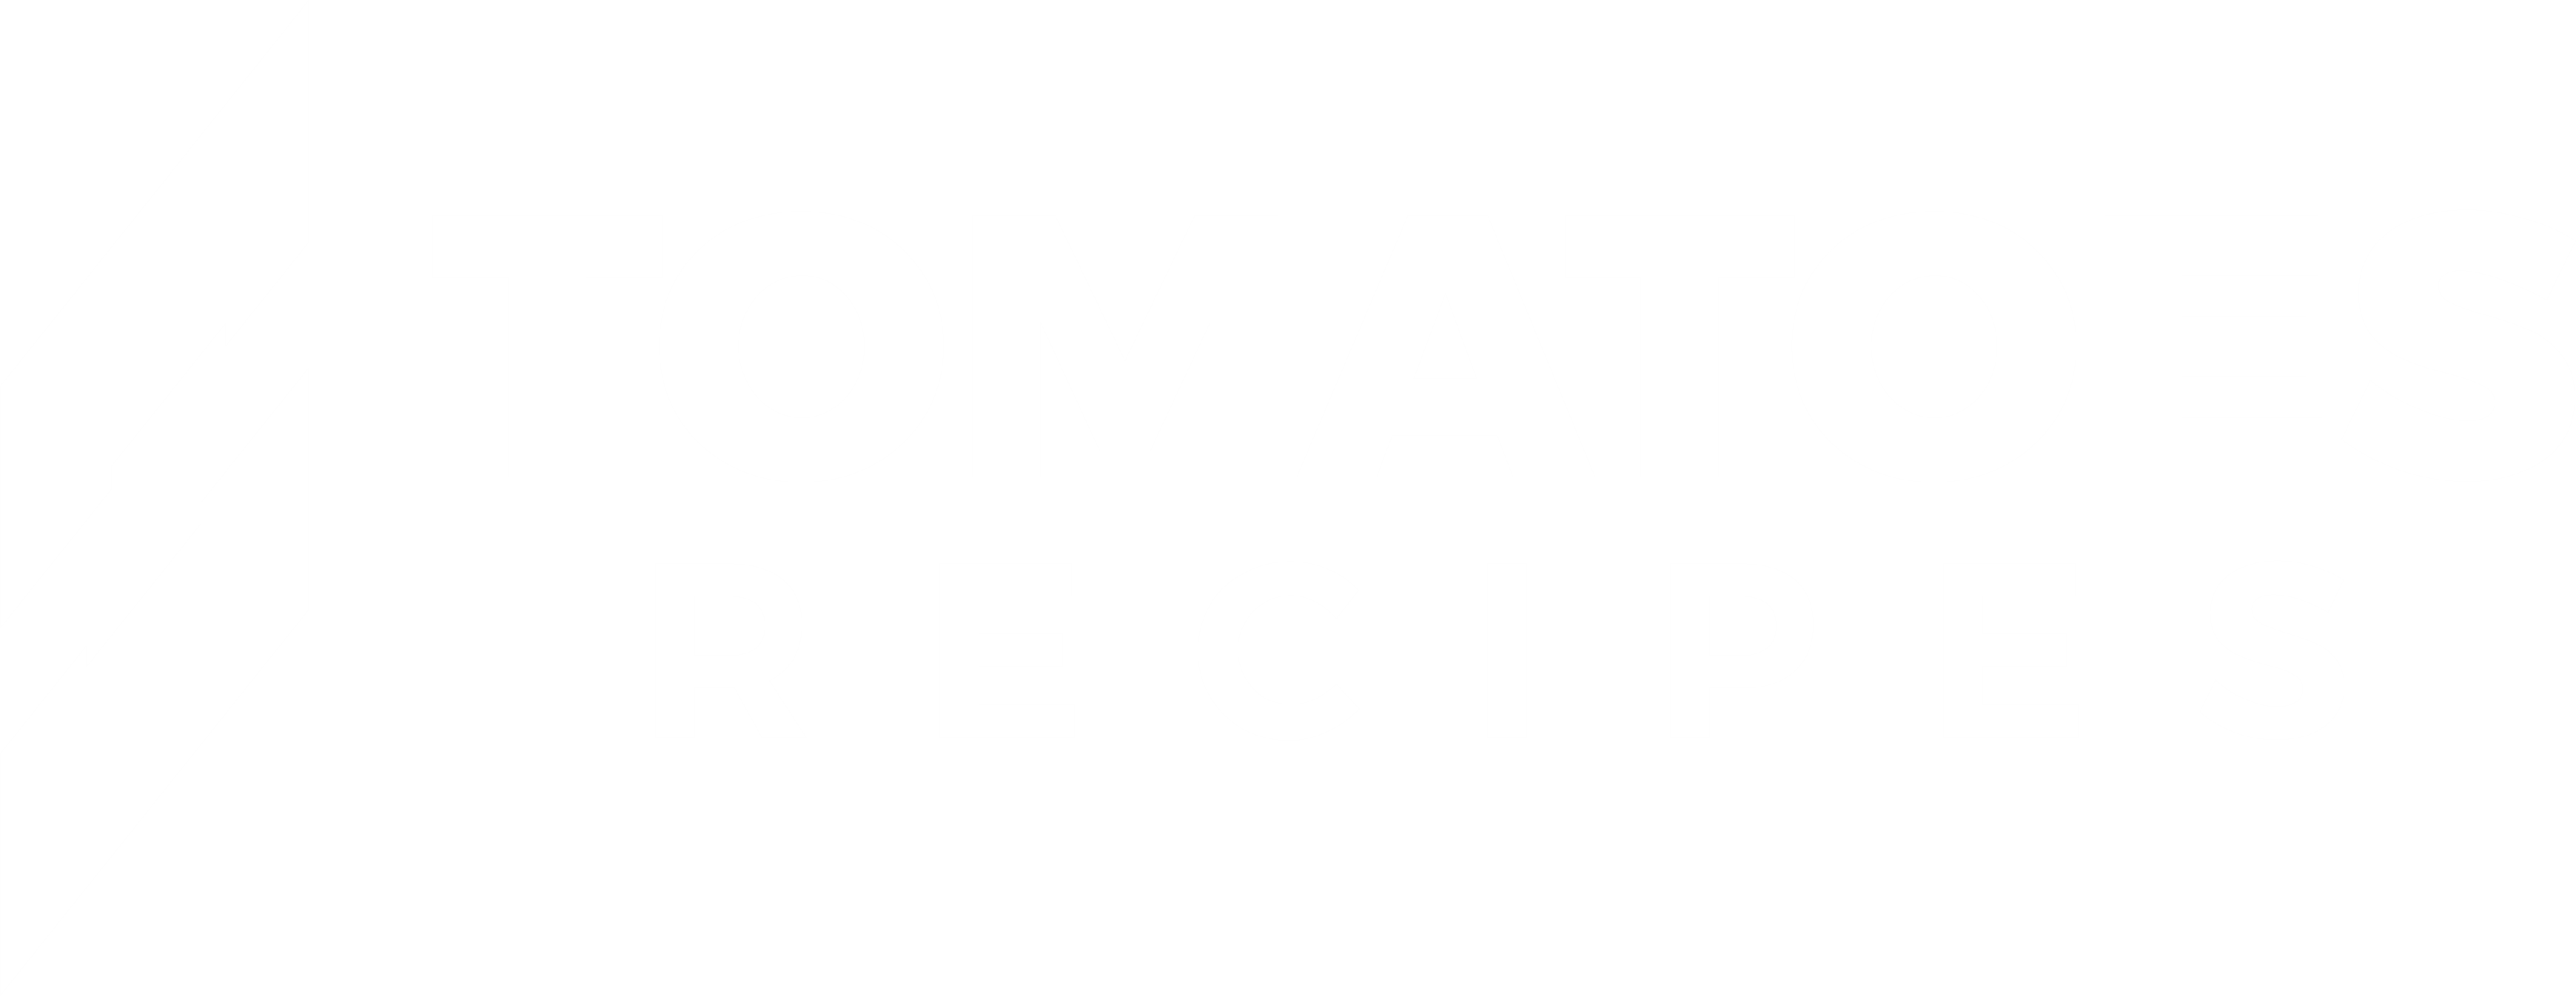 Tomatoes Recipes